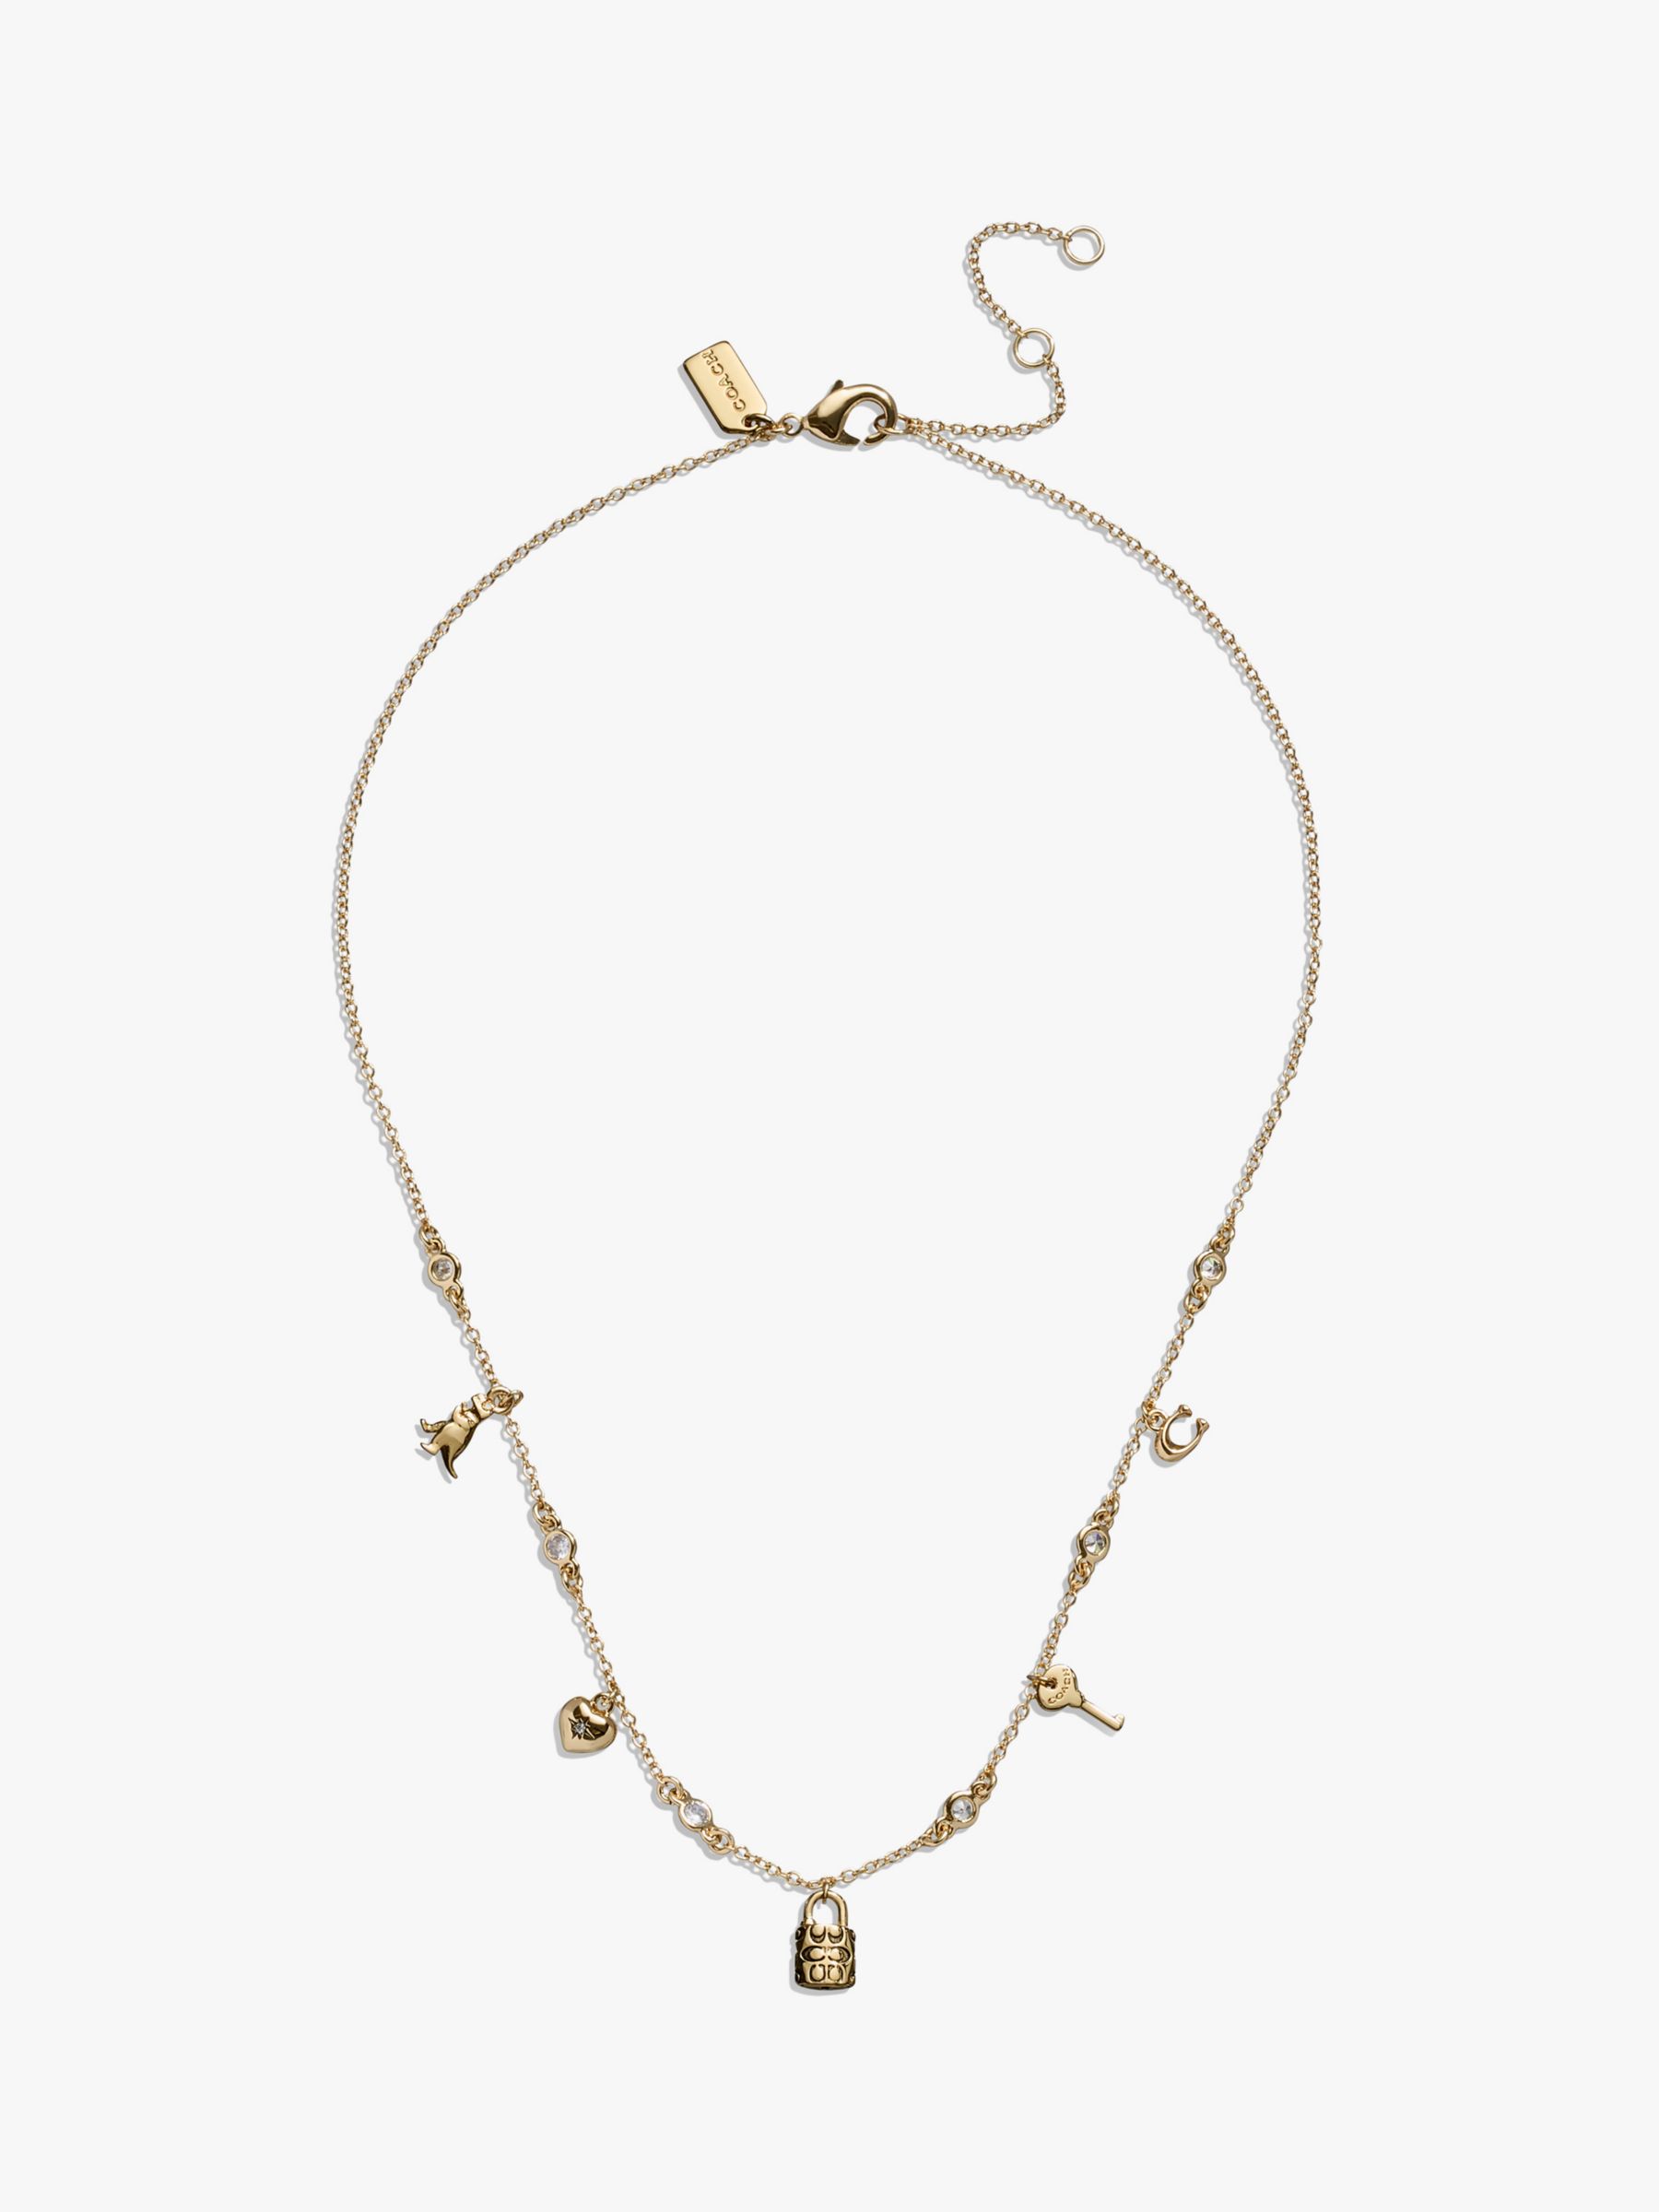 Coach Signature Charm Chain Necklace, Gold